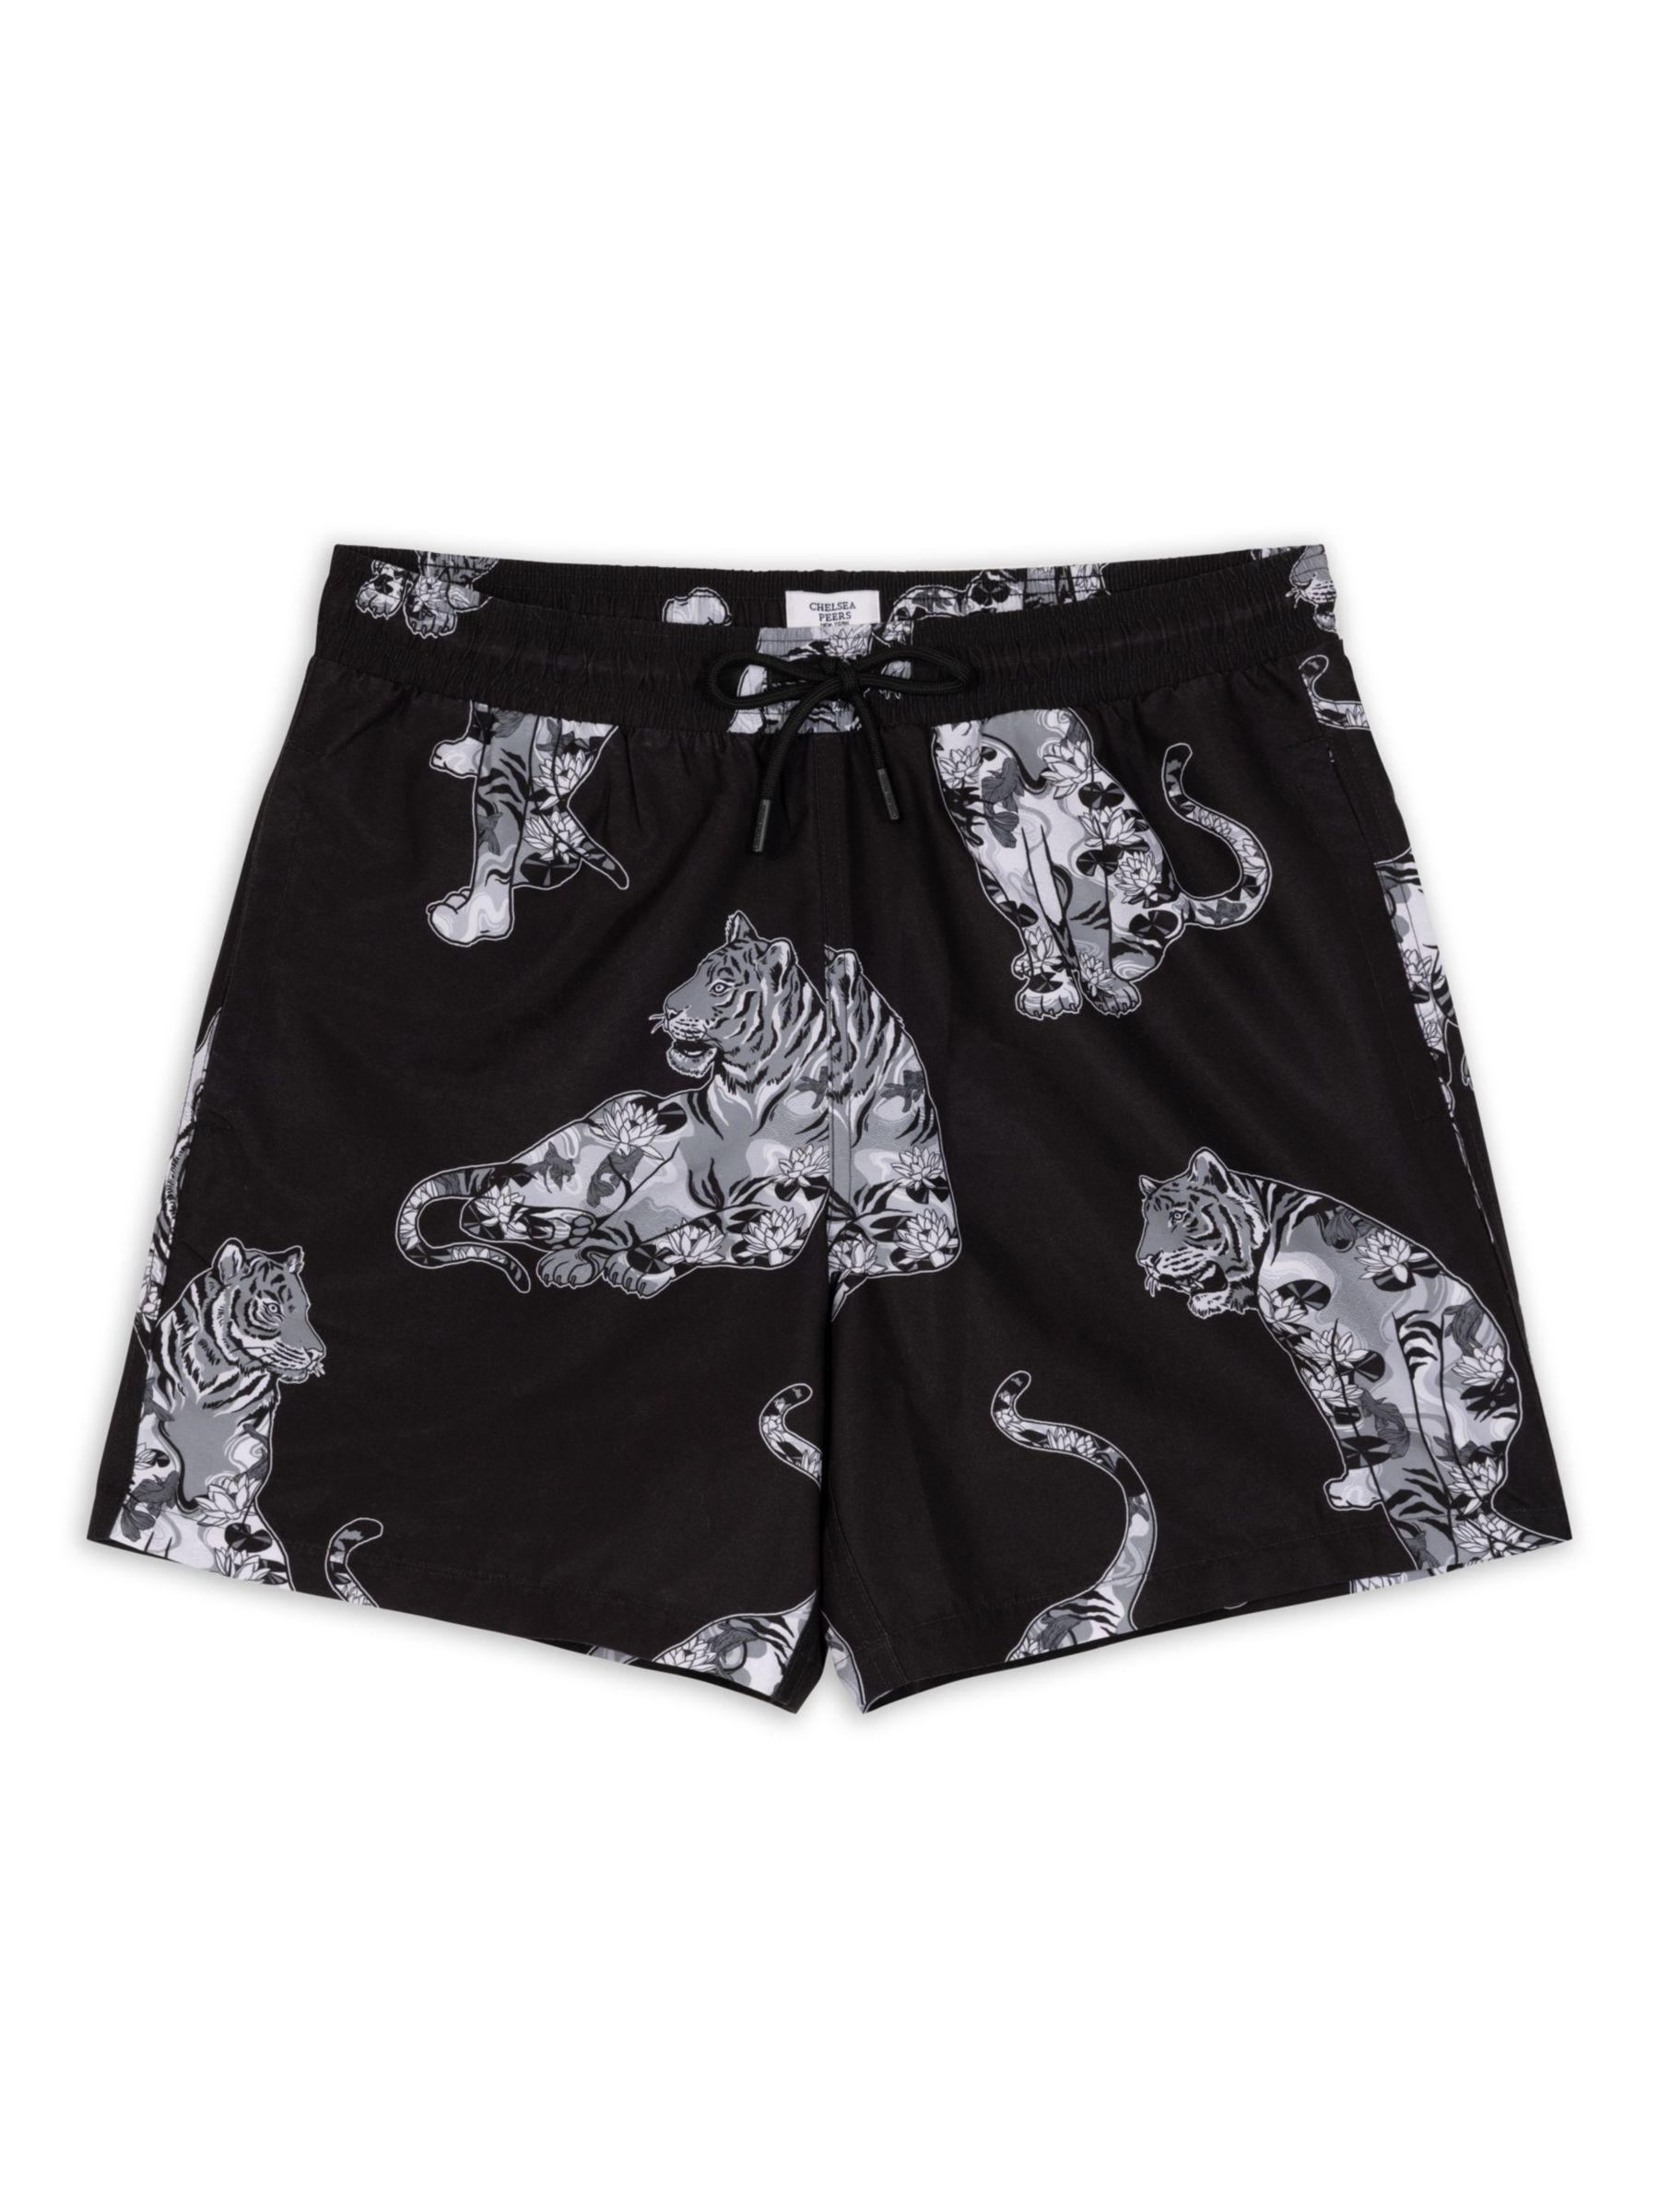 Chelsea Peers Lotus Tiger Print Swim Shorts, Black/White, L